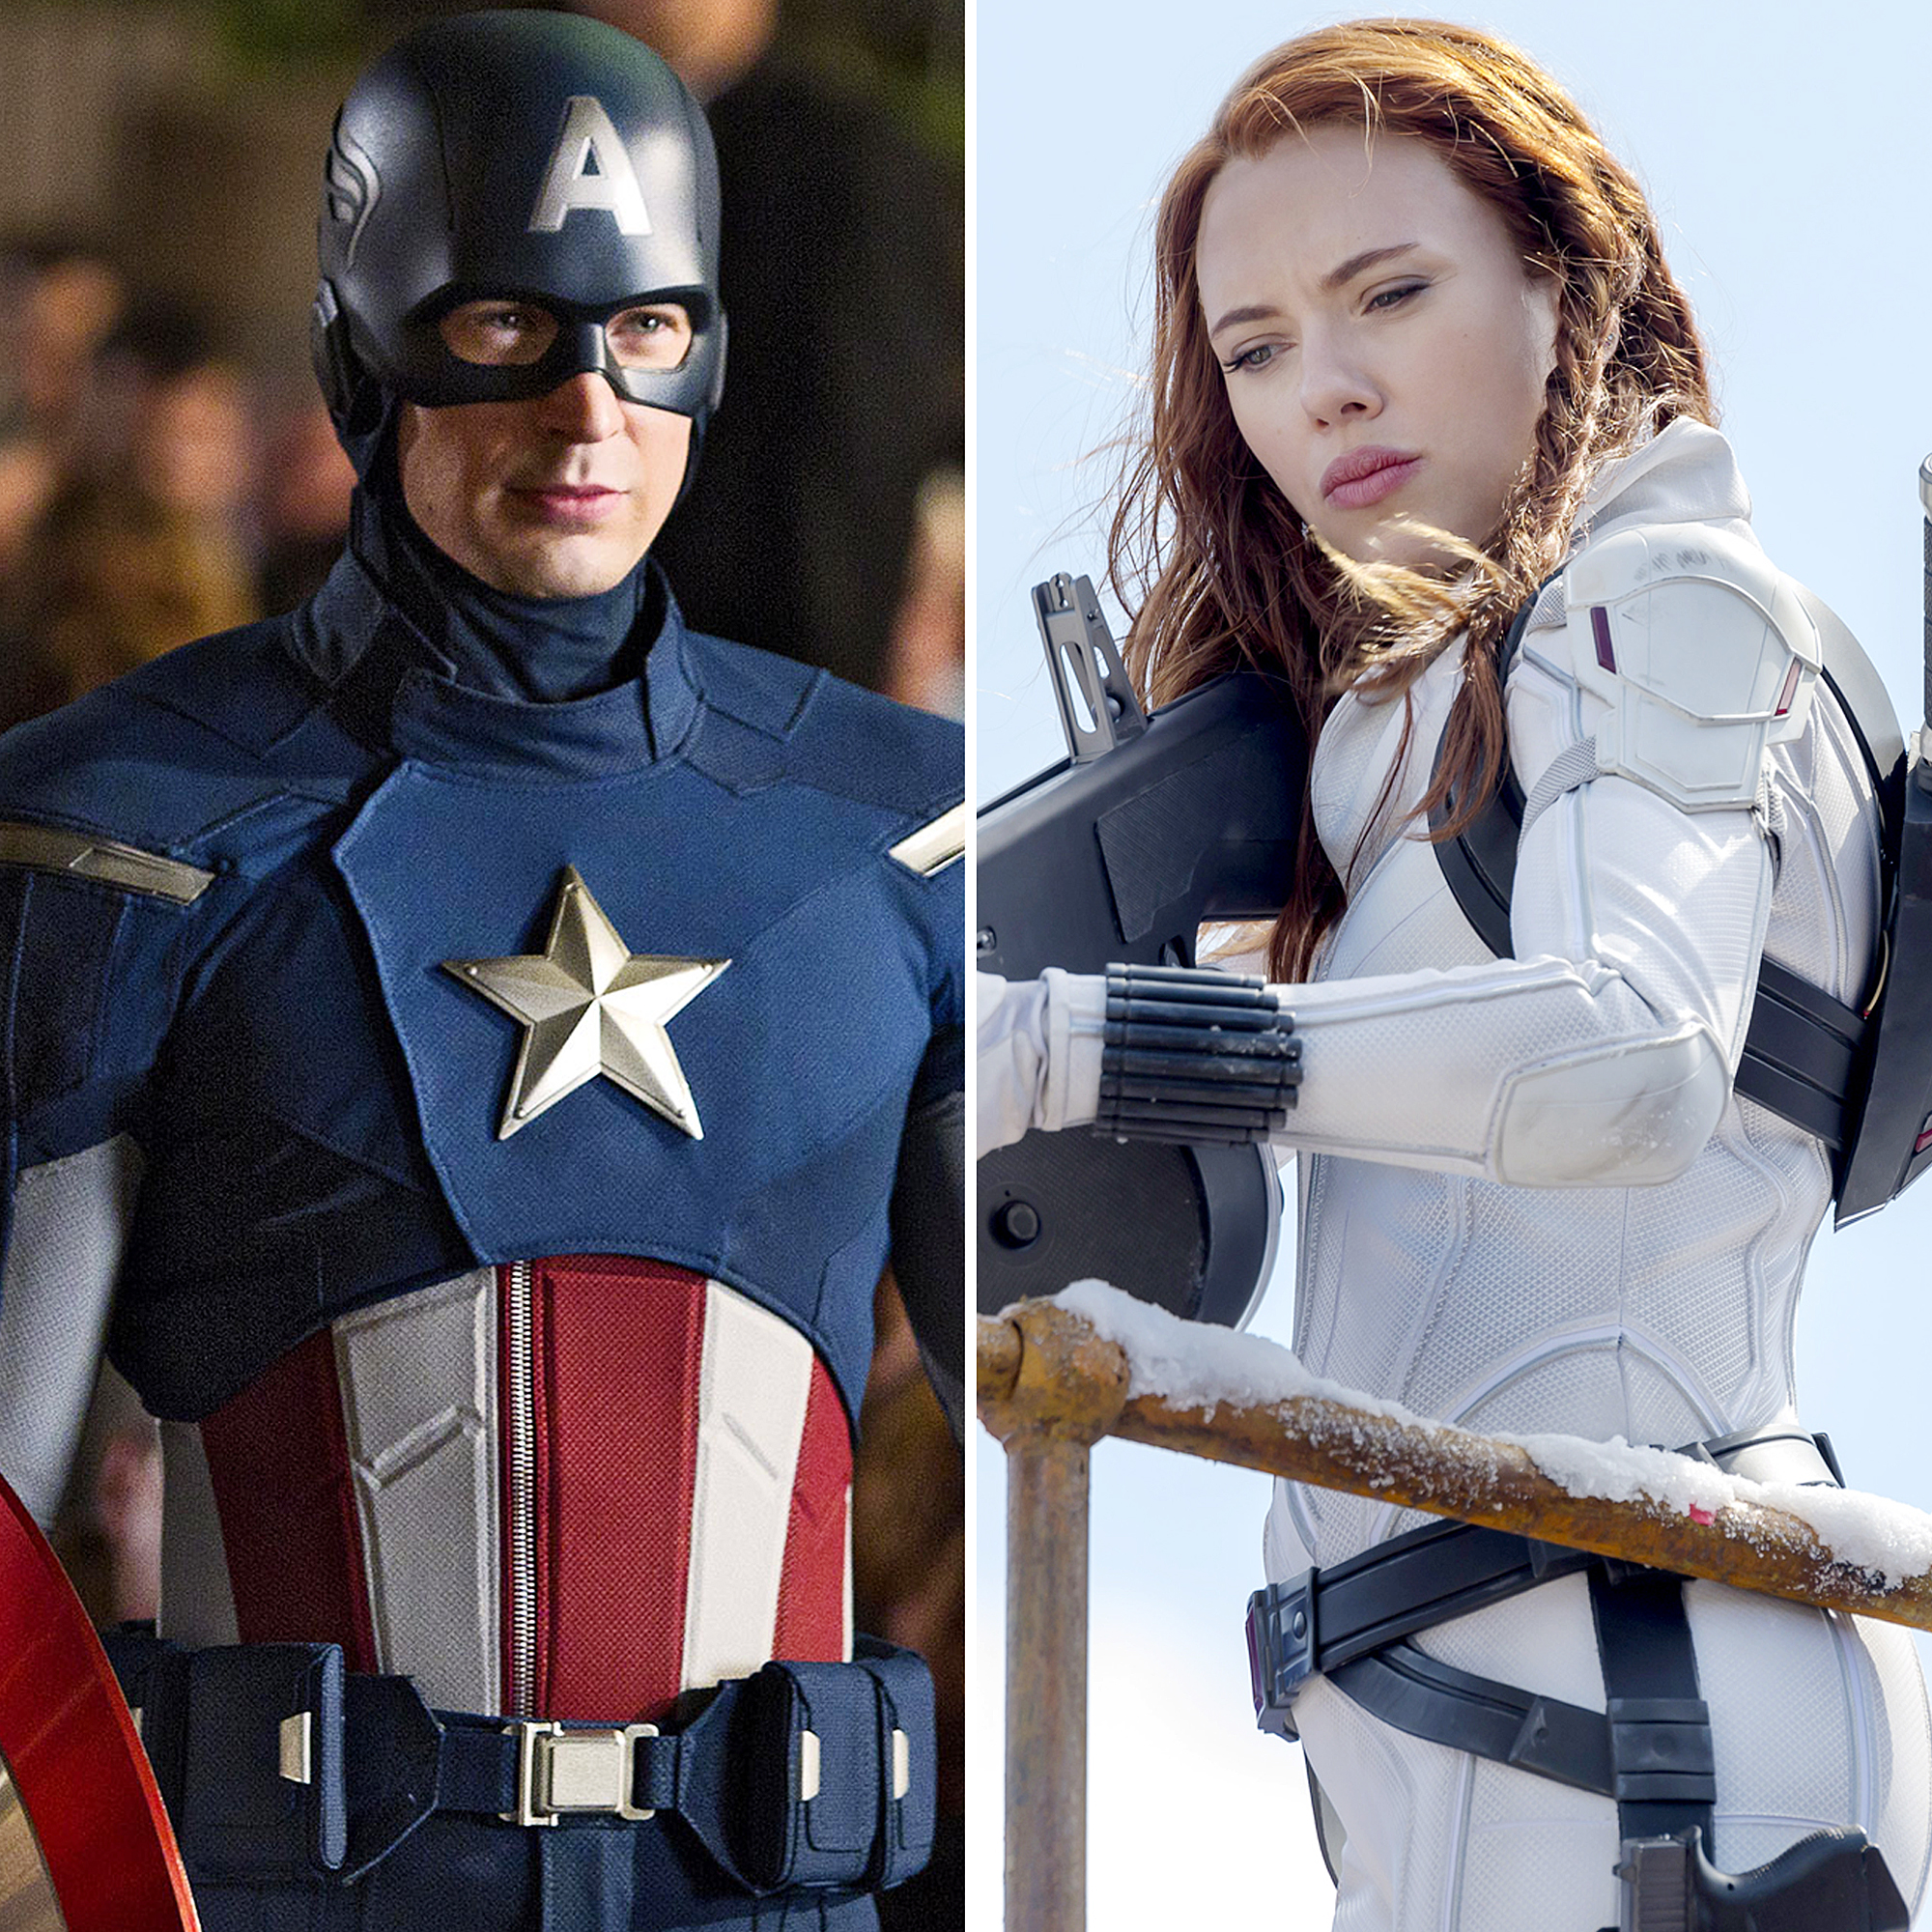 Marvel Cast Salaries: Chris Evans, Scarlett Johansson and More